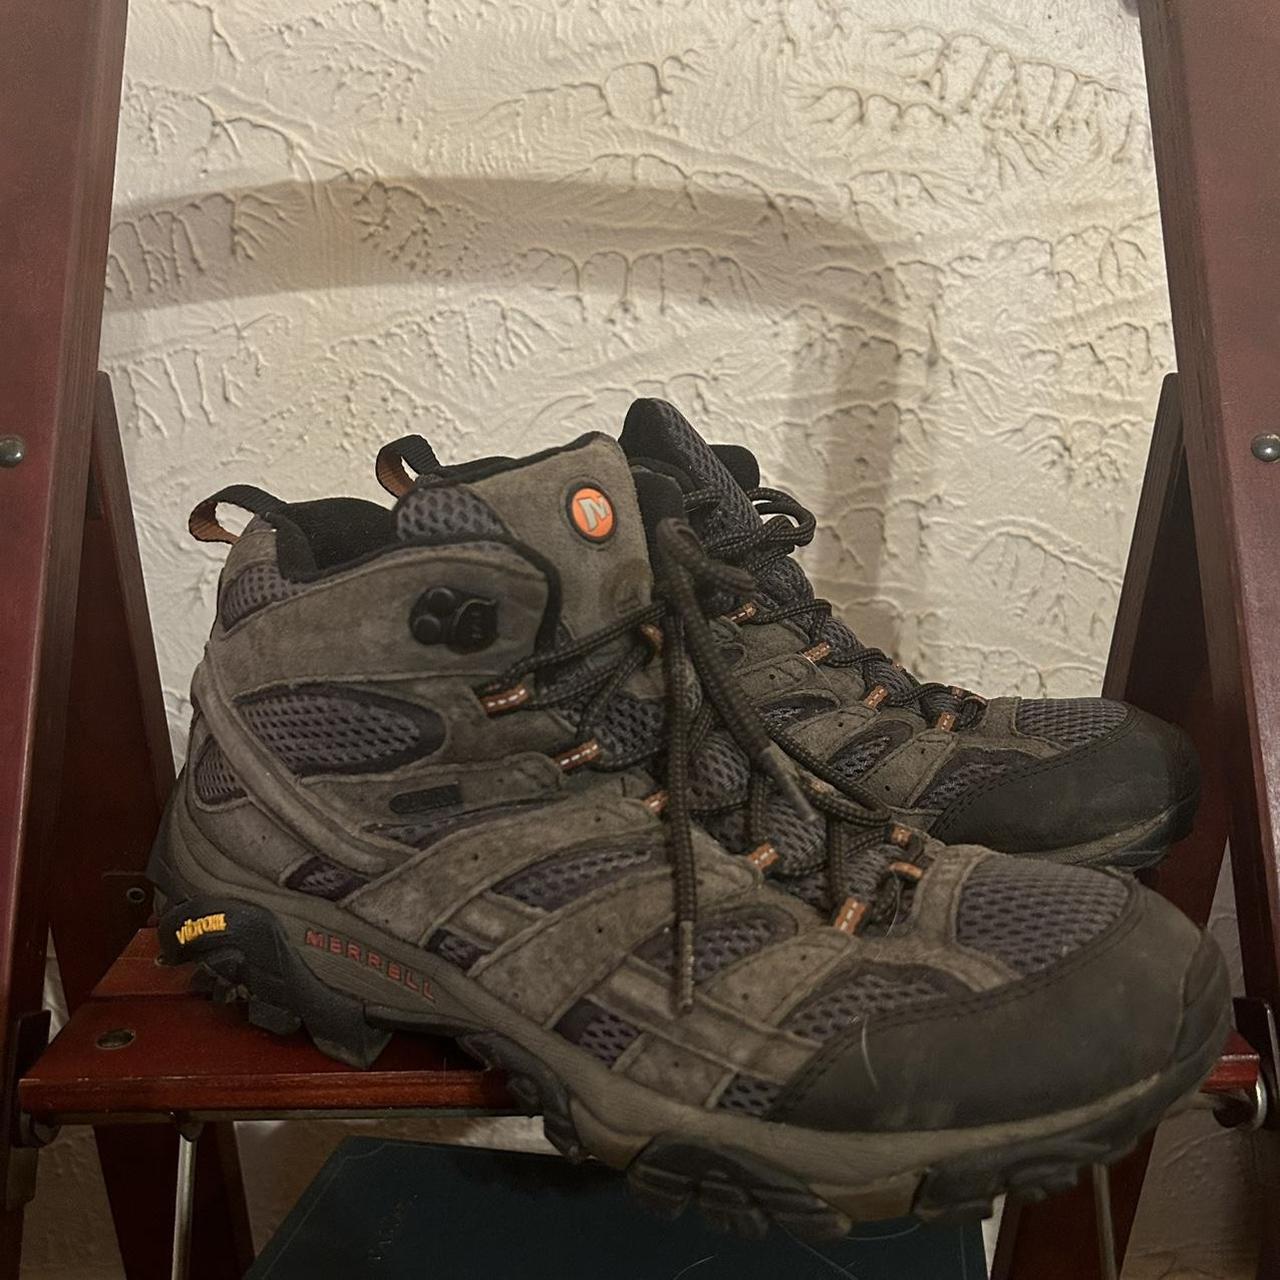 Merrill Moab 2 waterproof hiking boots size... - Depop